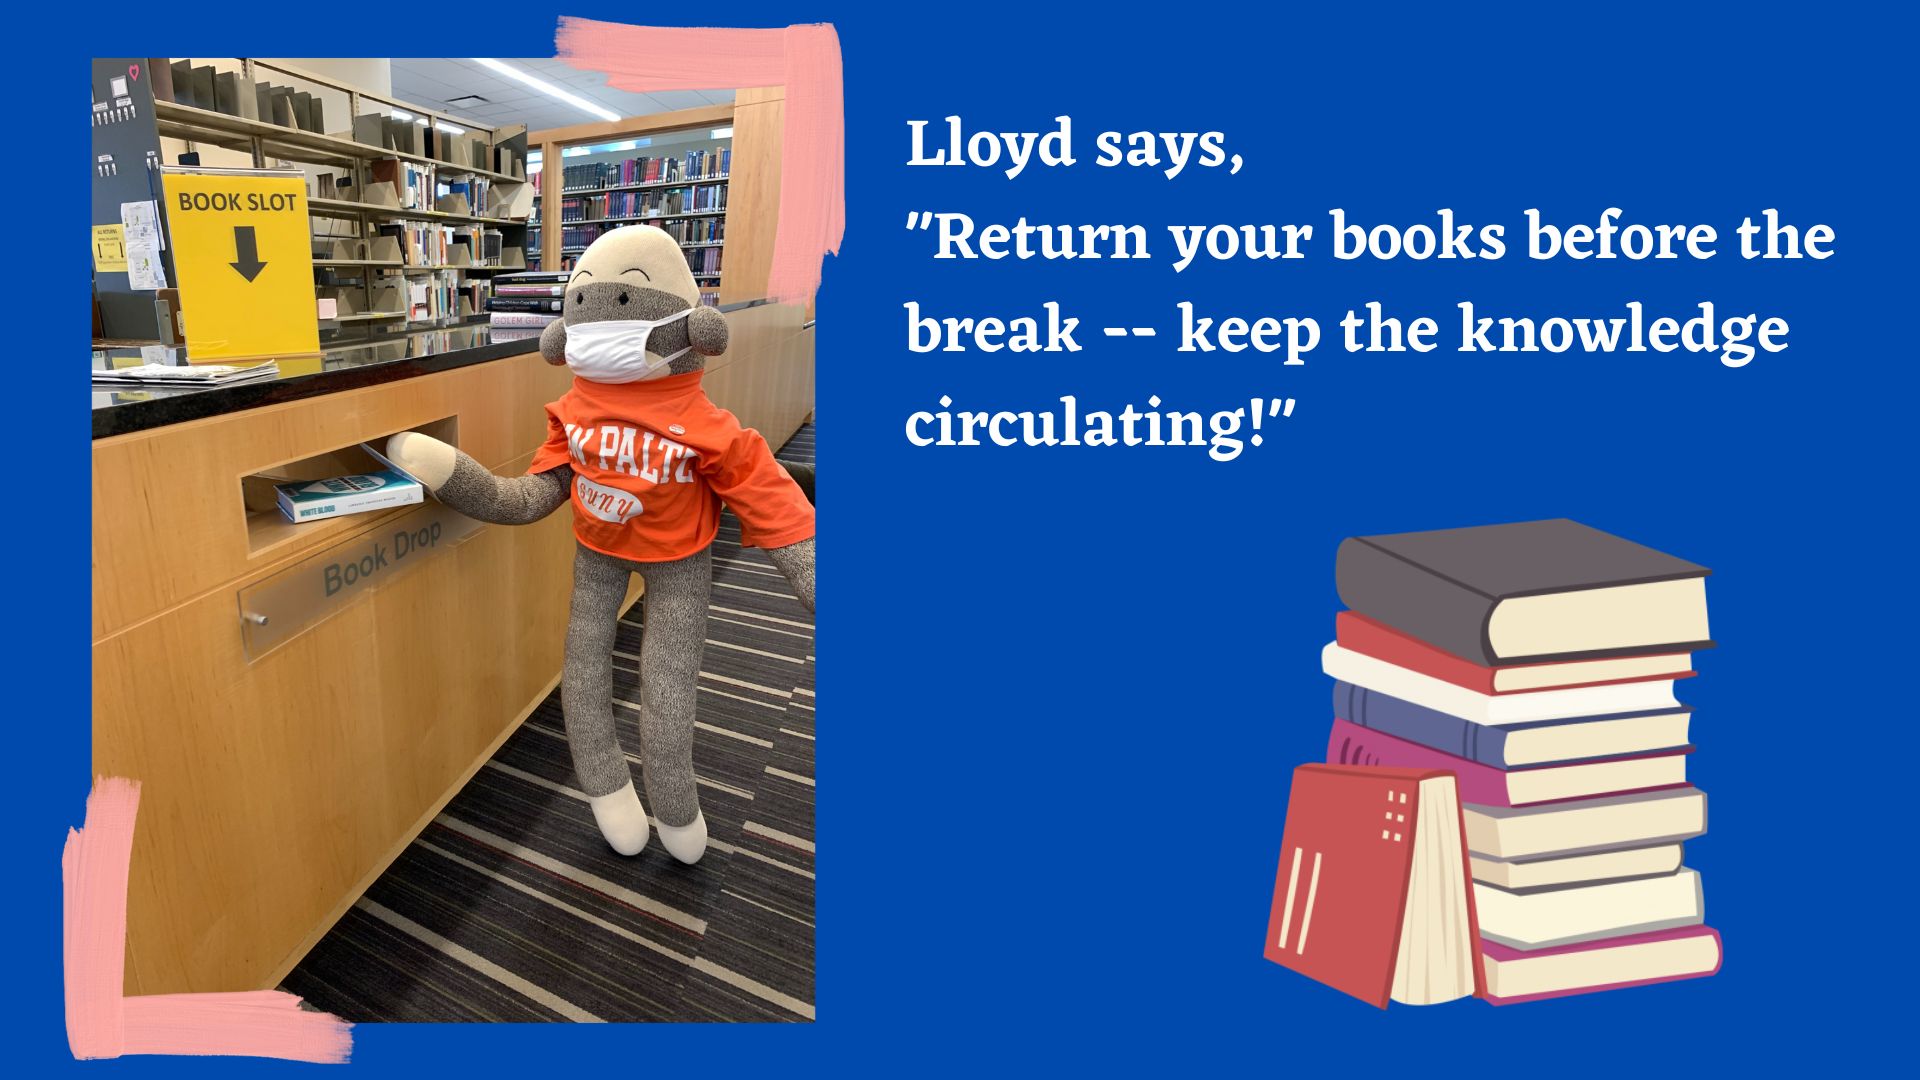 Lloyd says – “Return your books”